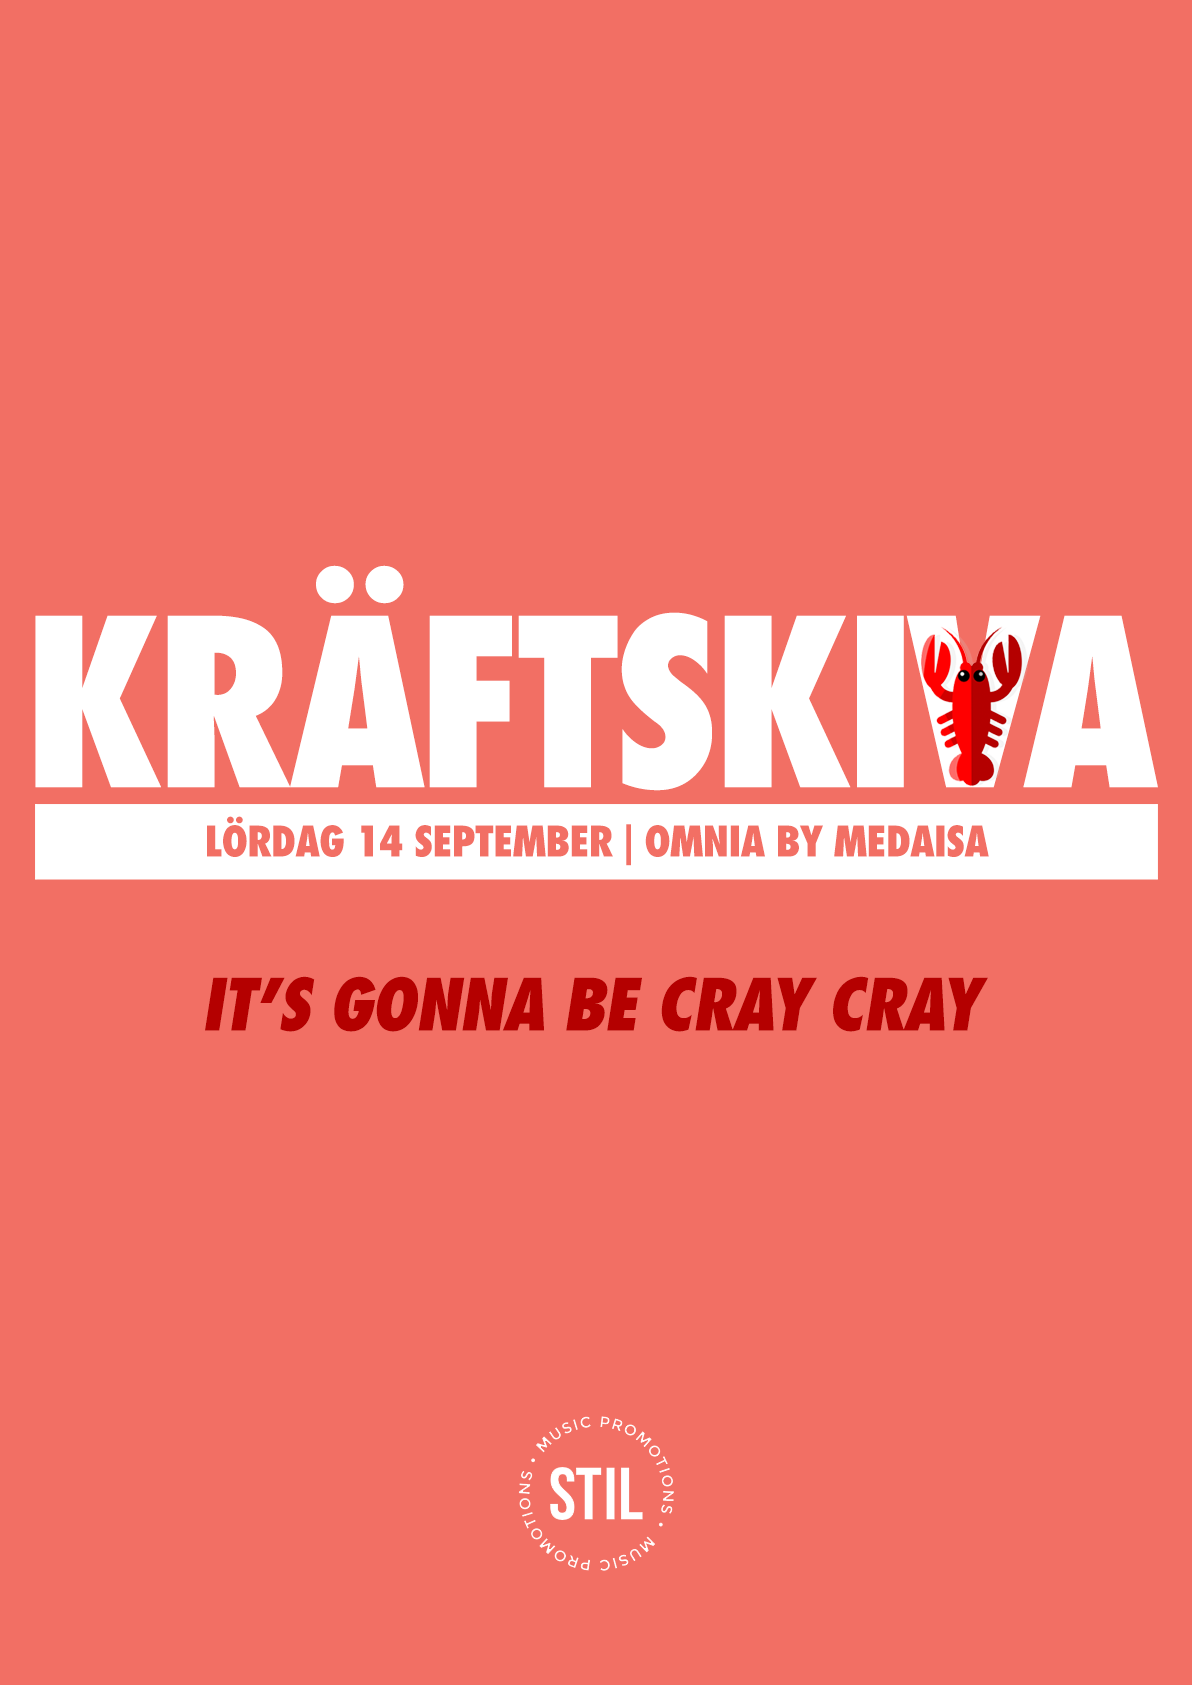 Kräftskiva 2019 (Swedish Crayfish Party) poster